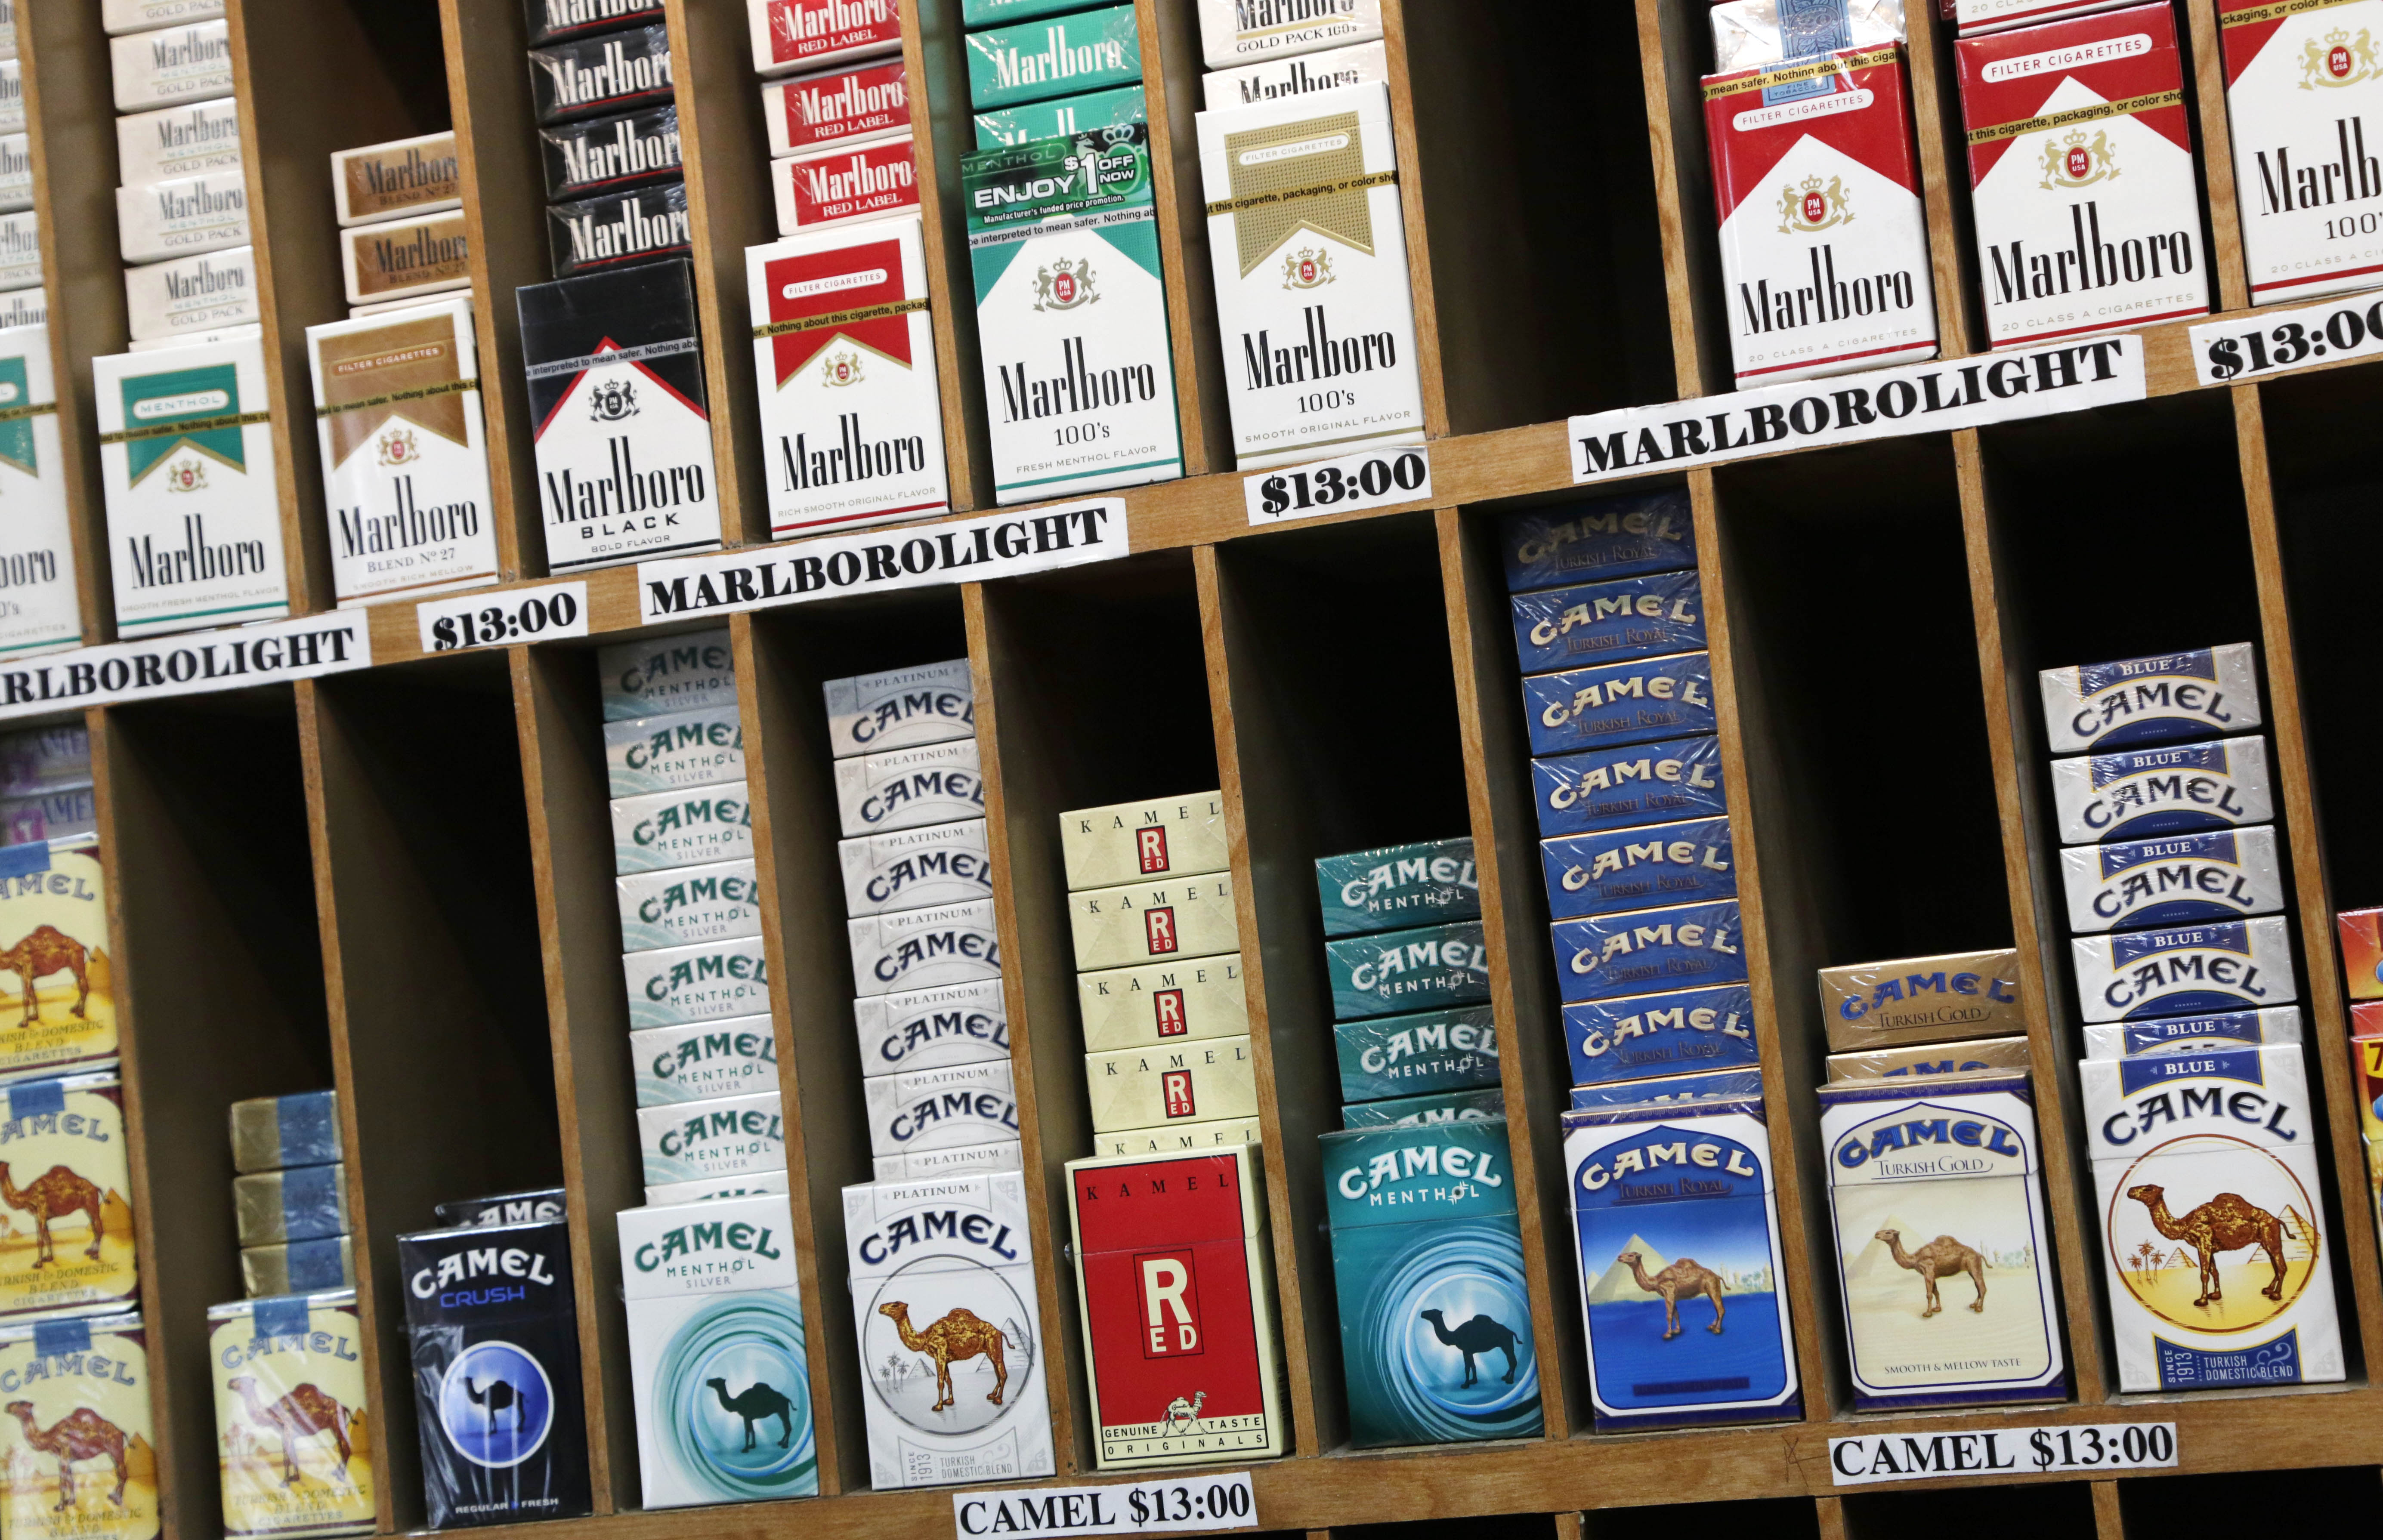 Different Types Of Marlboro Cigarettes